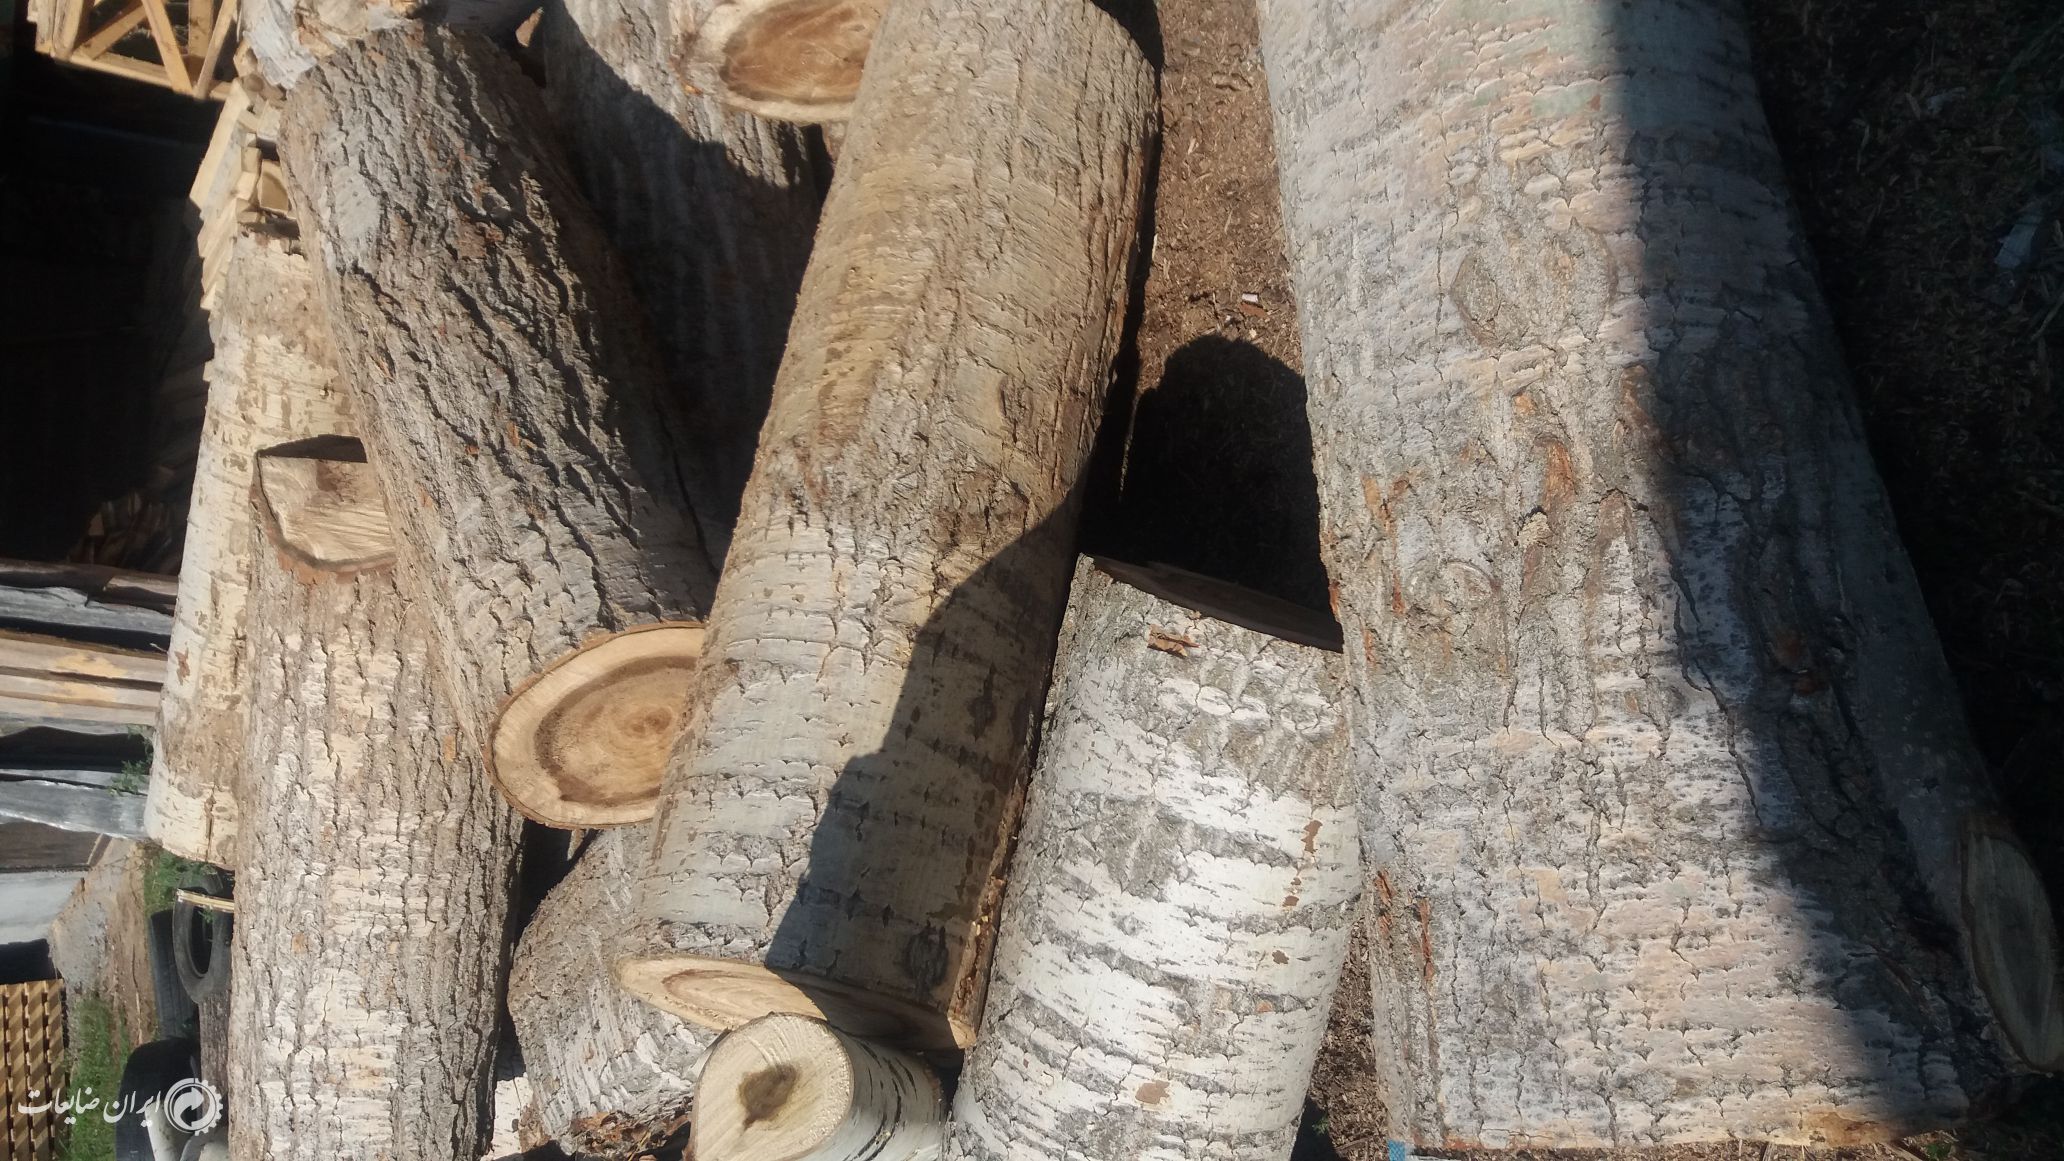 فروش چوب صنوبر قطر 25 تا 40